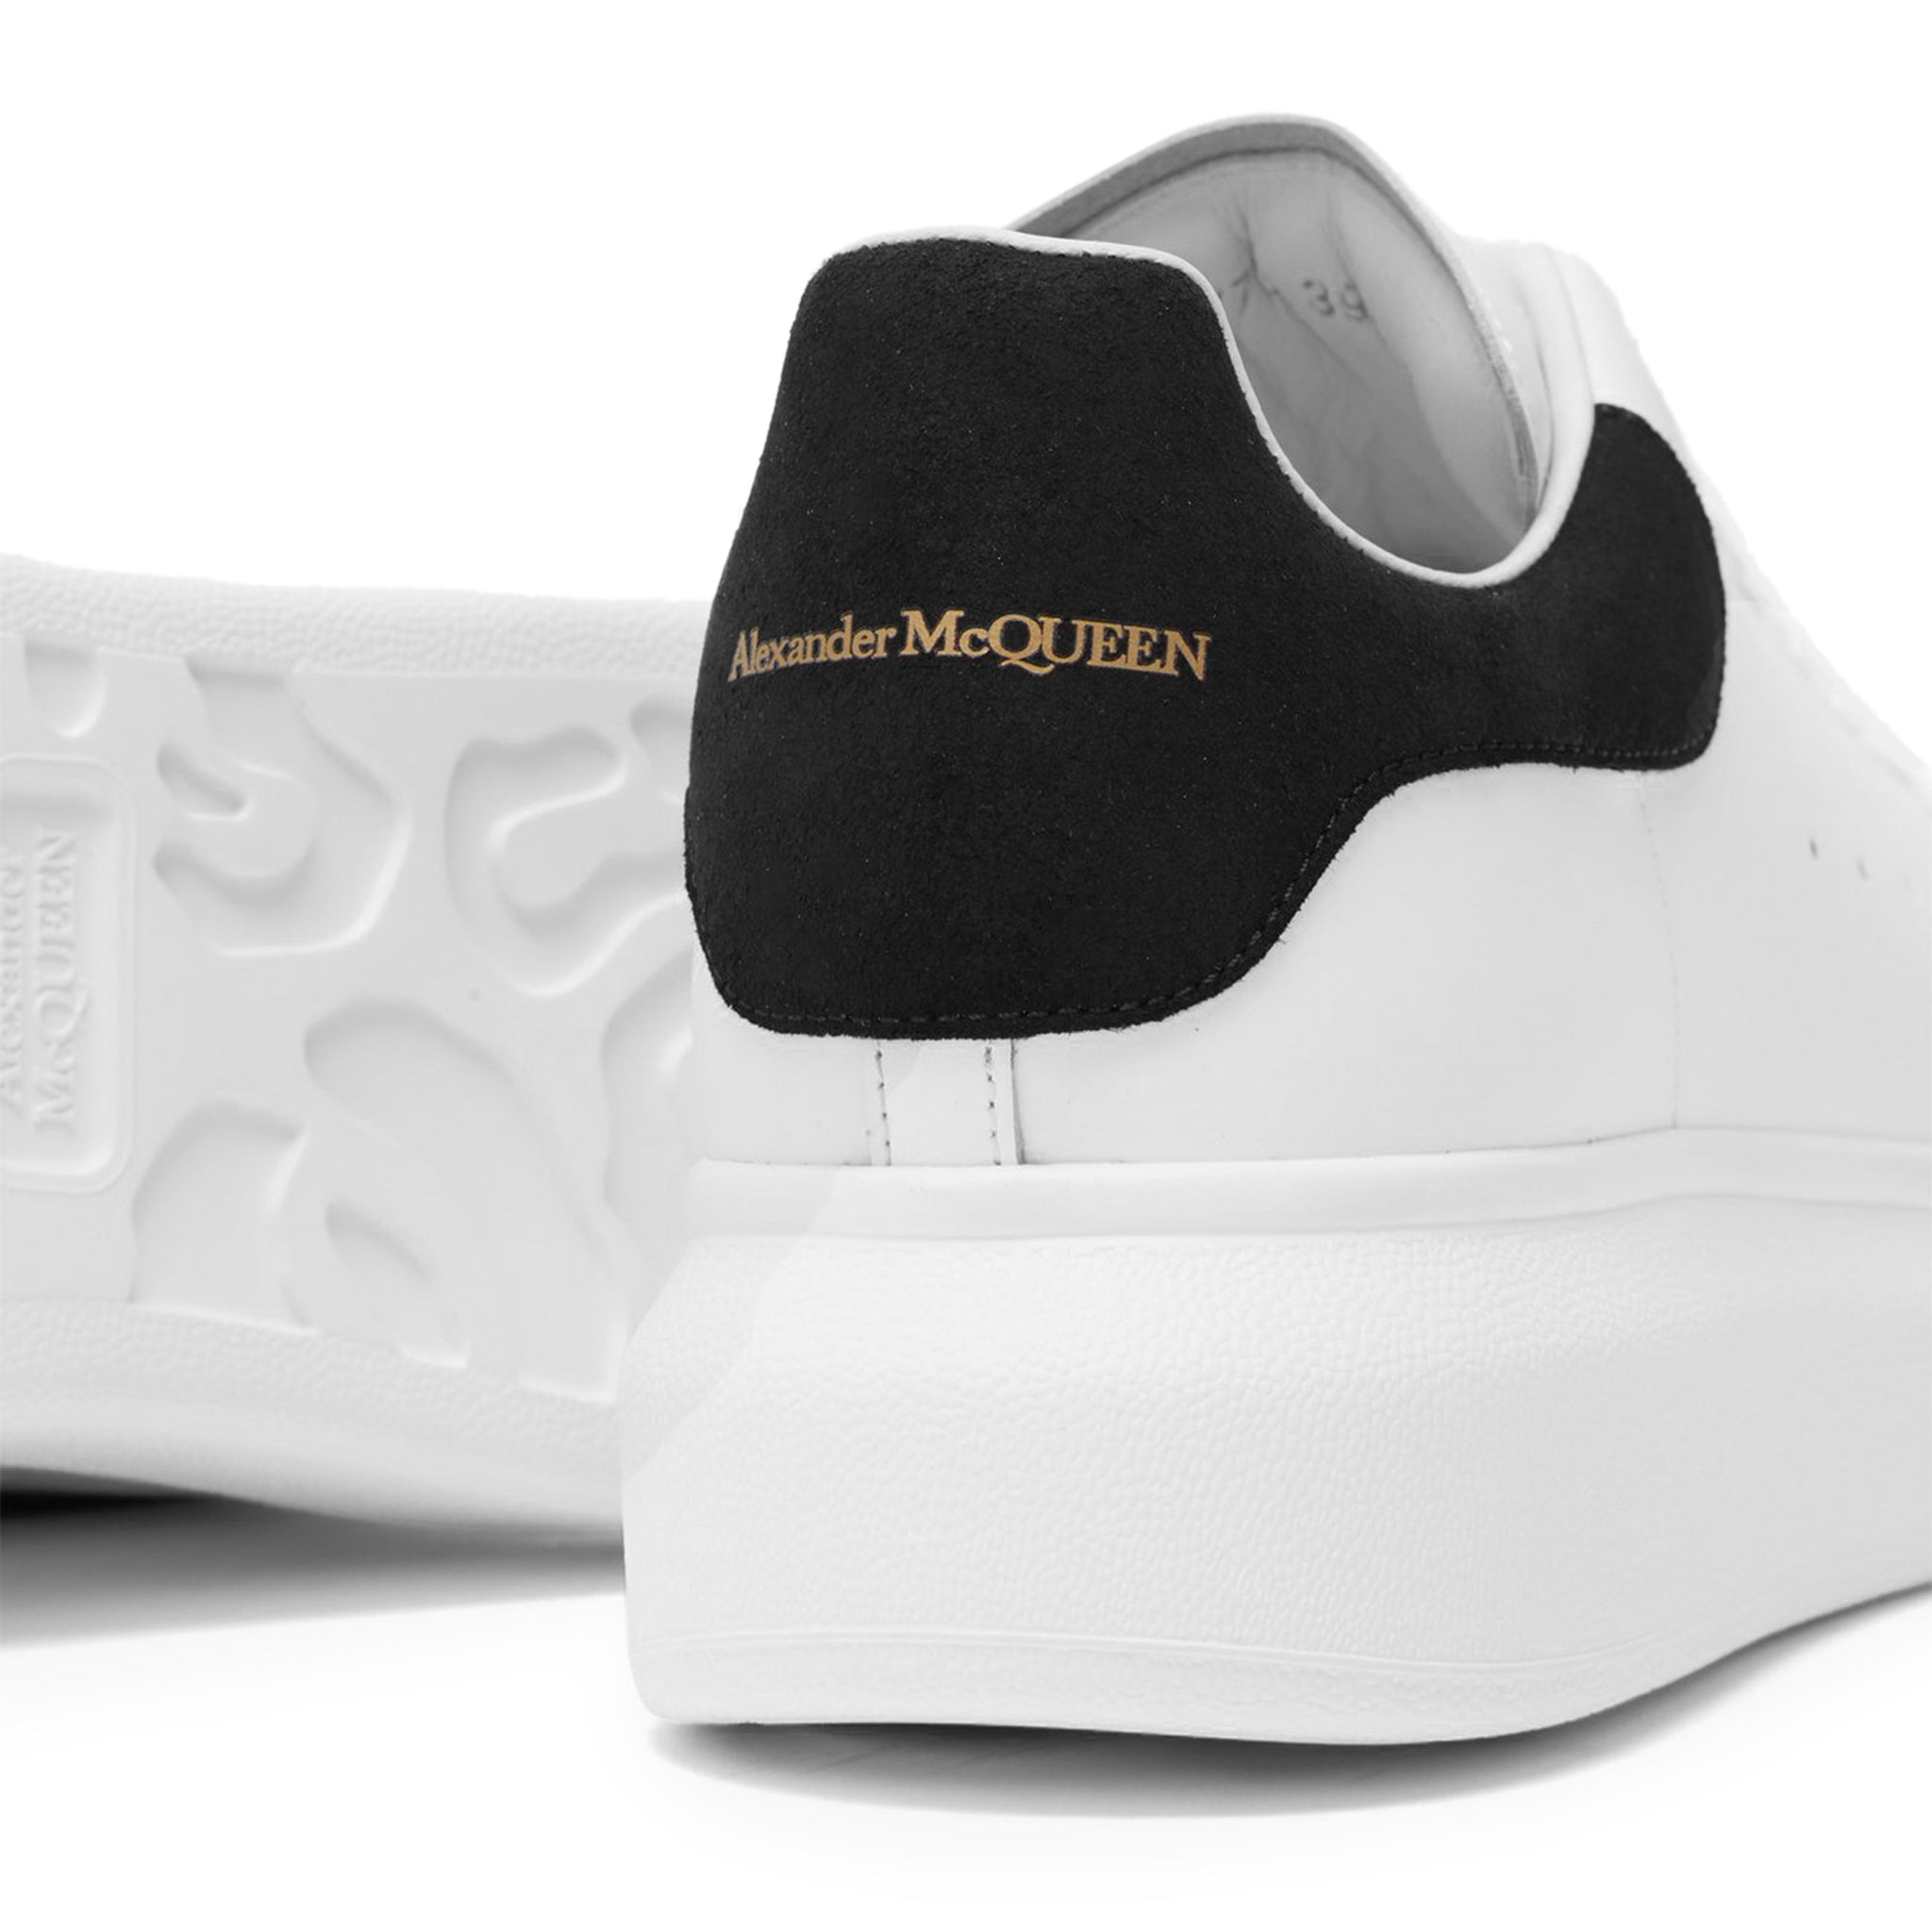 Detail view of Alexander Mcqueen Raised Sole White Black Suede Sneaker